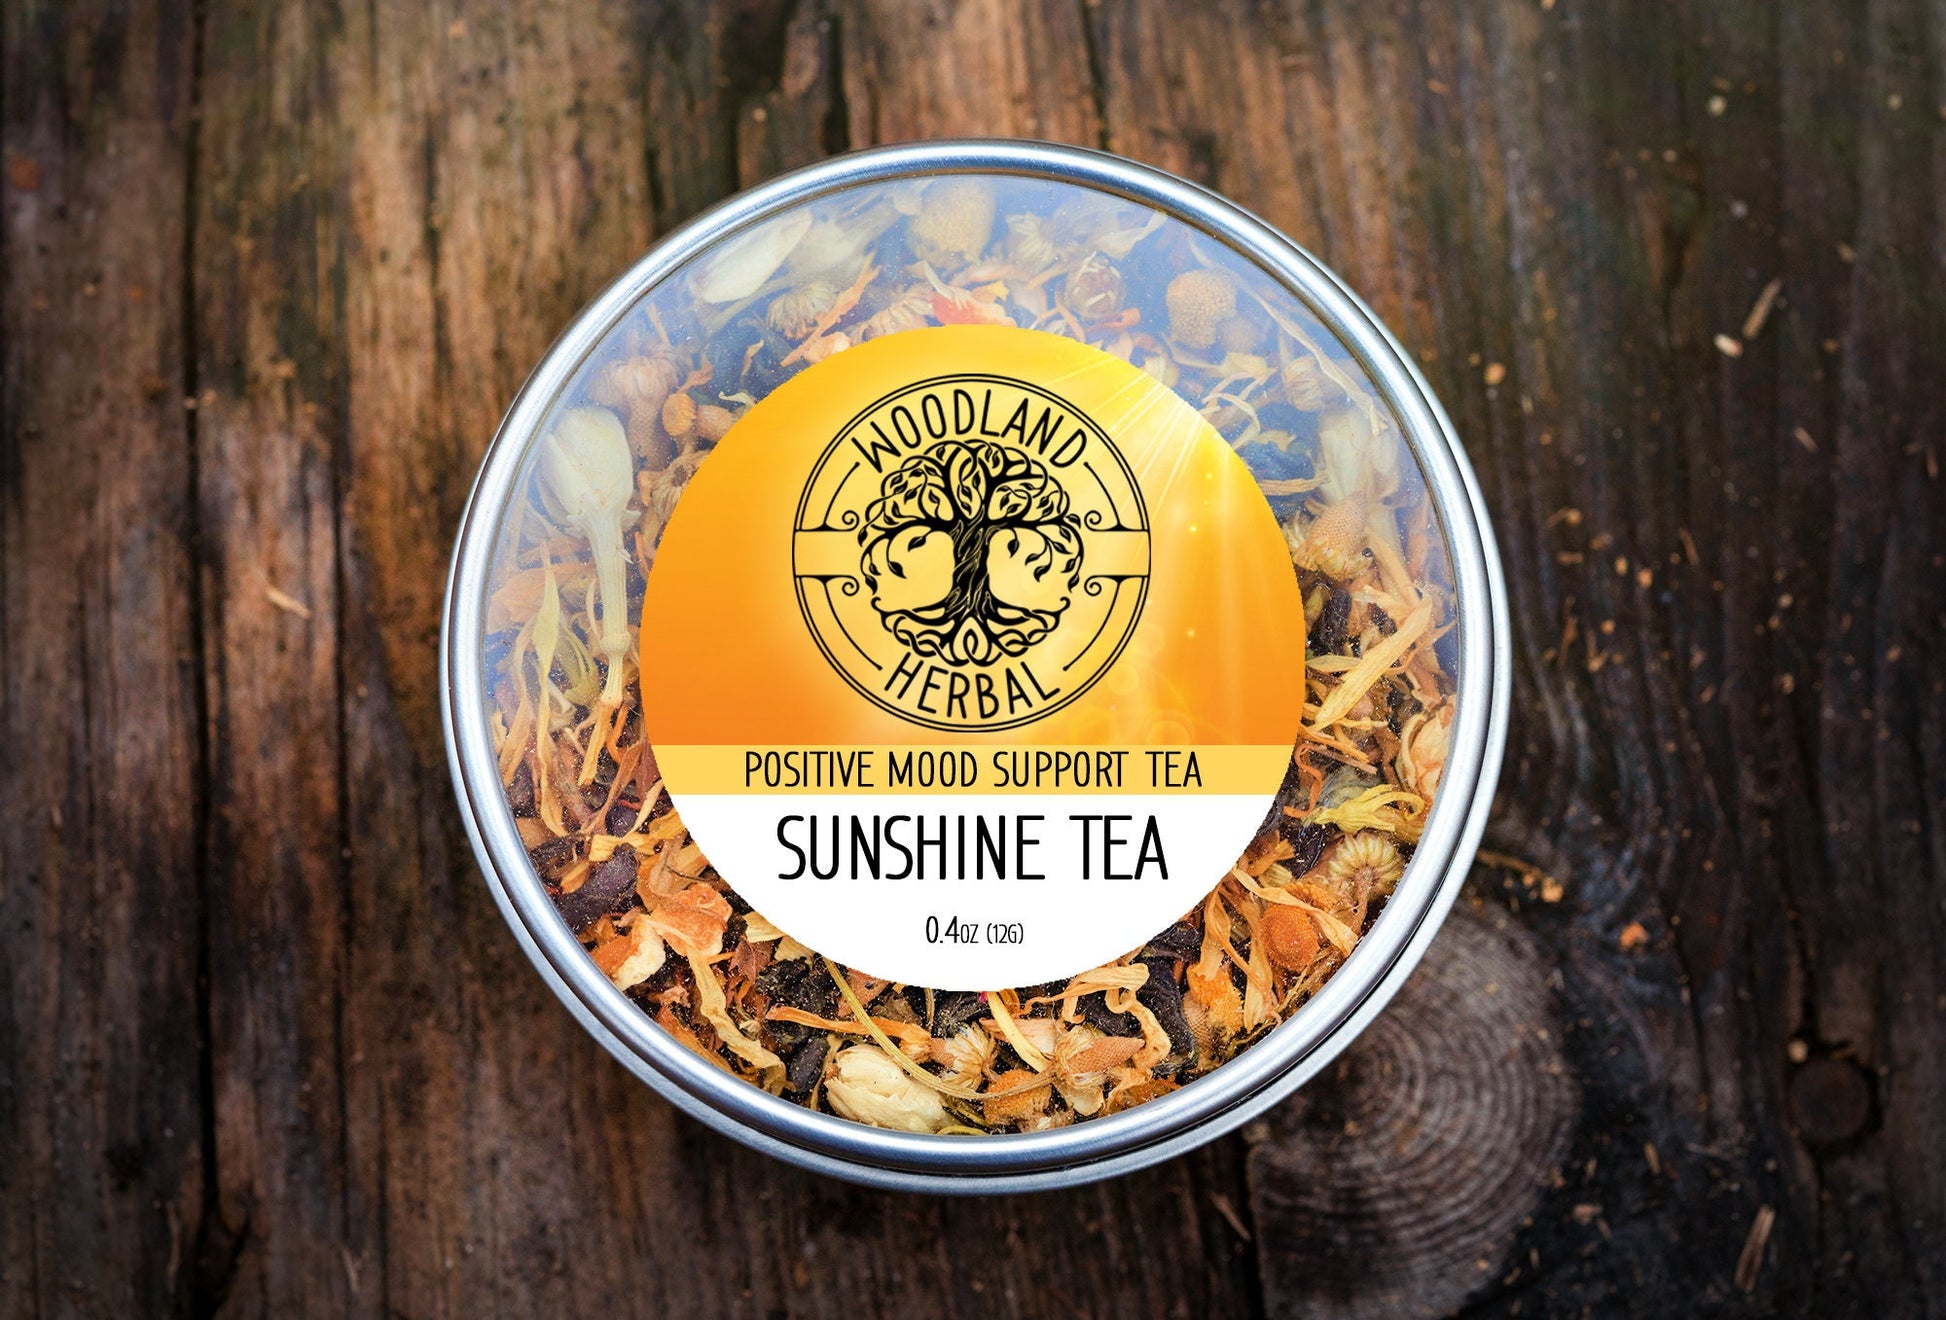 5 Tea Special - Buy 4 Get 1 FREE! Natural Loose Leaf Teas 2.5oz - Organic Tea for Sleep, Immunity, Focus, Anxiety, Energy, Dreaming, etc - DukeCityHerbs